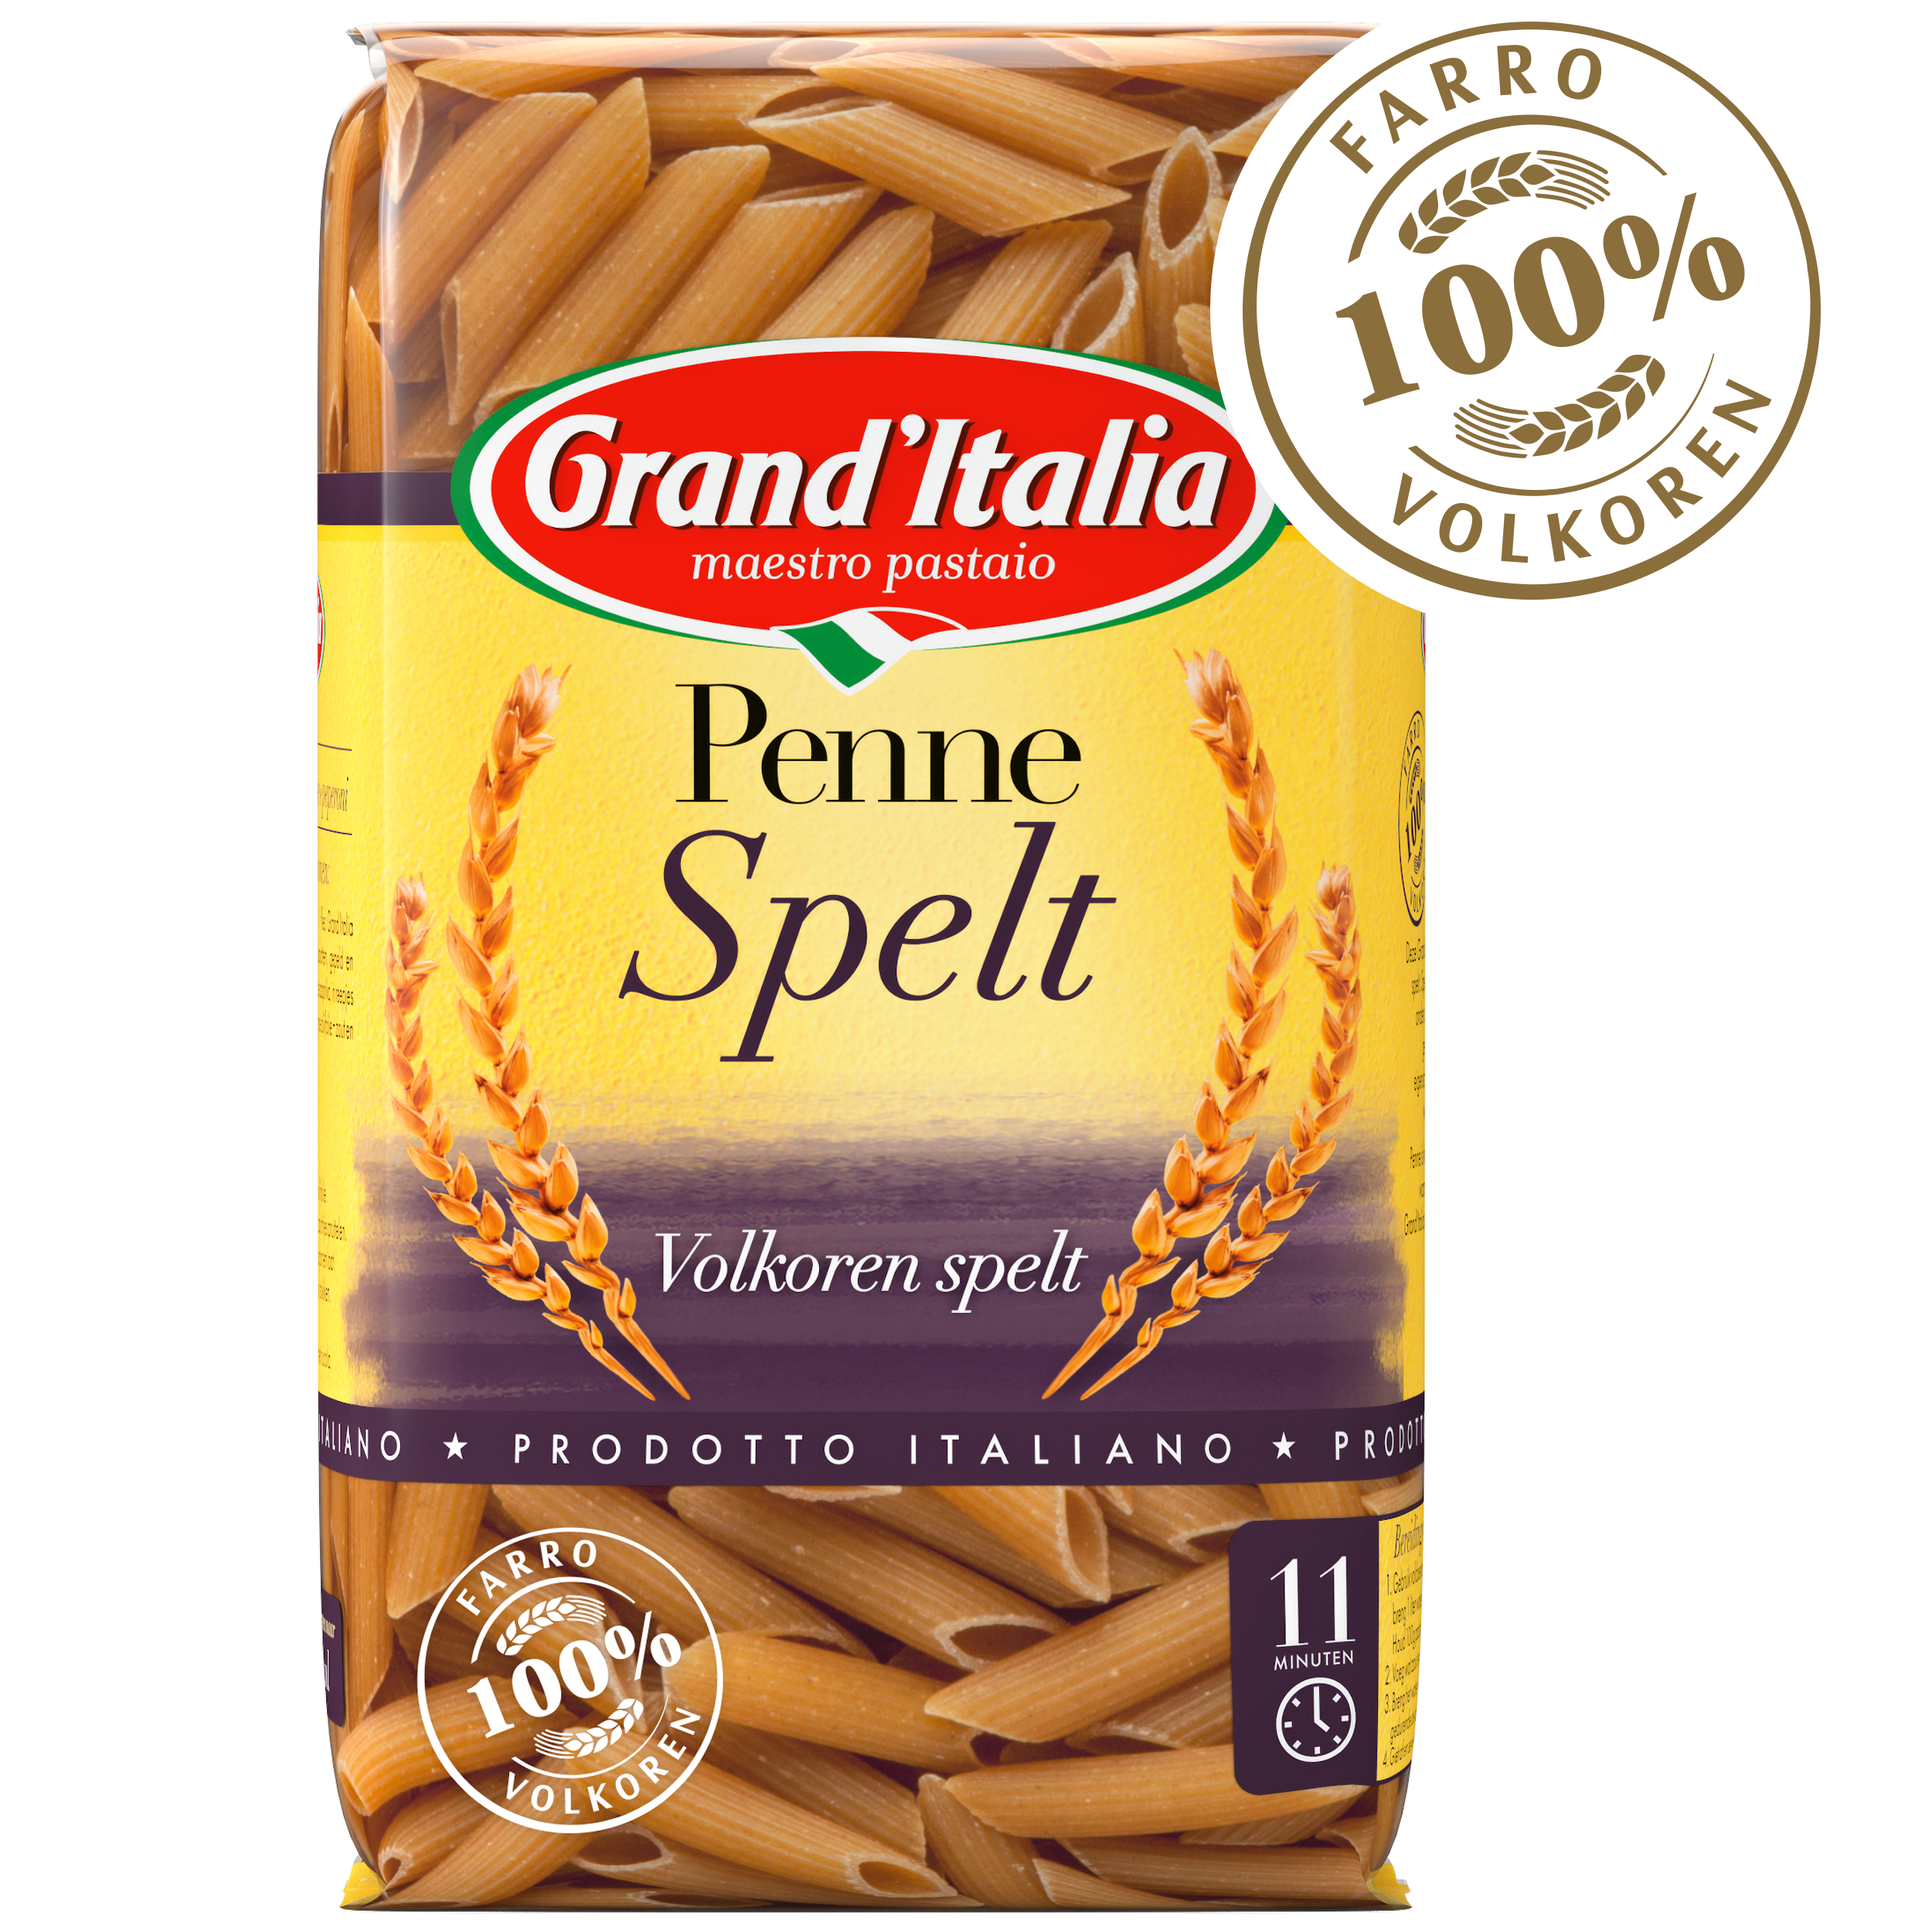 Pasta Penne Spelt 500g claim Grand'Italia